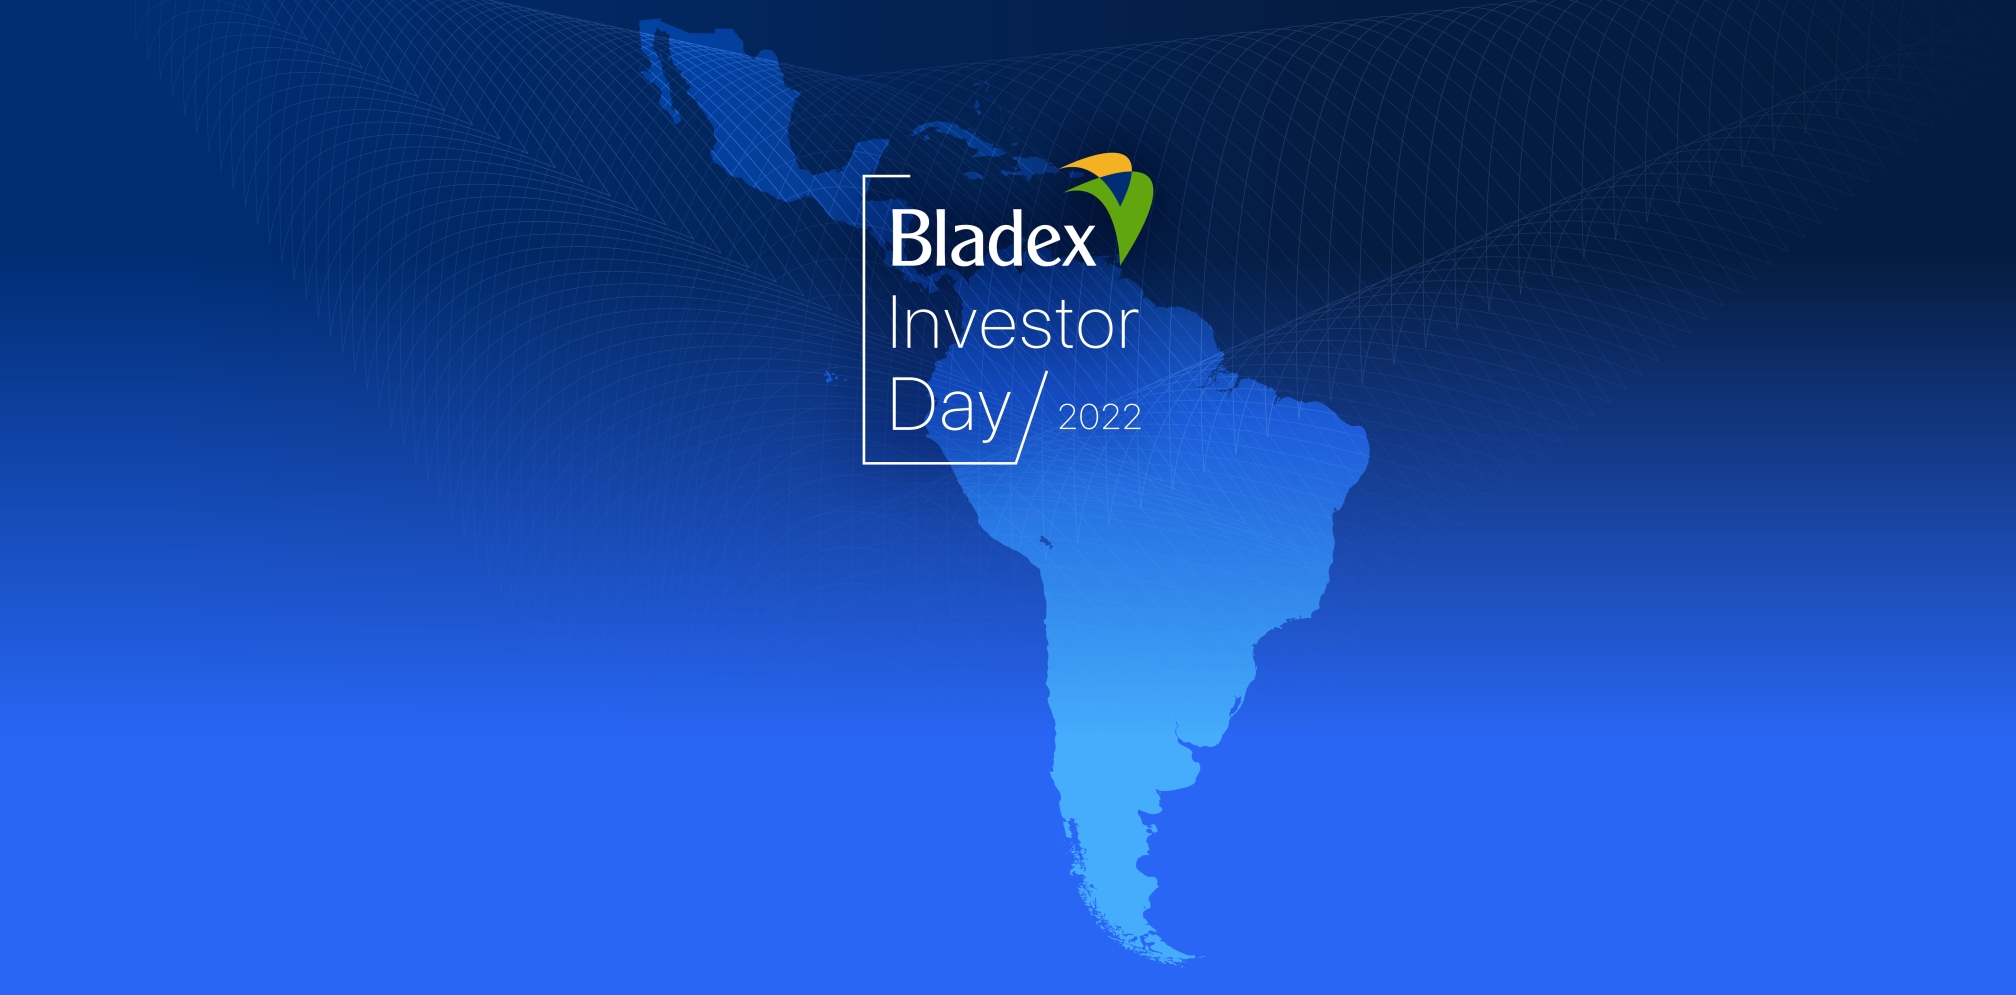 Bladex Investor Day 2022 Banner